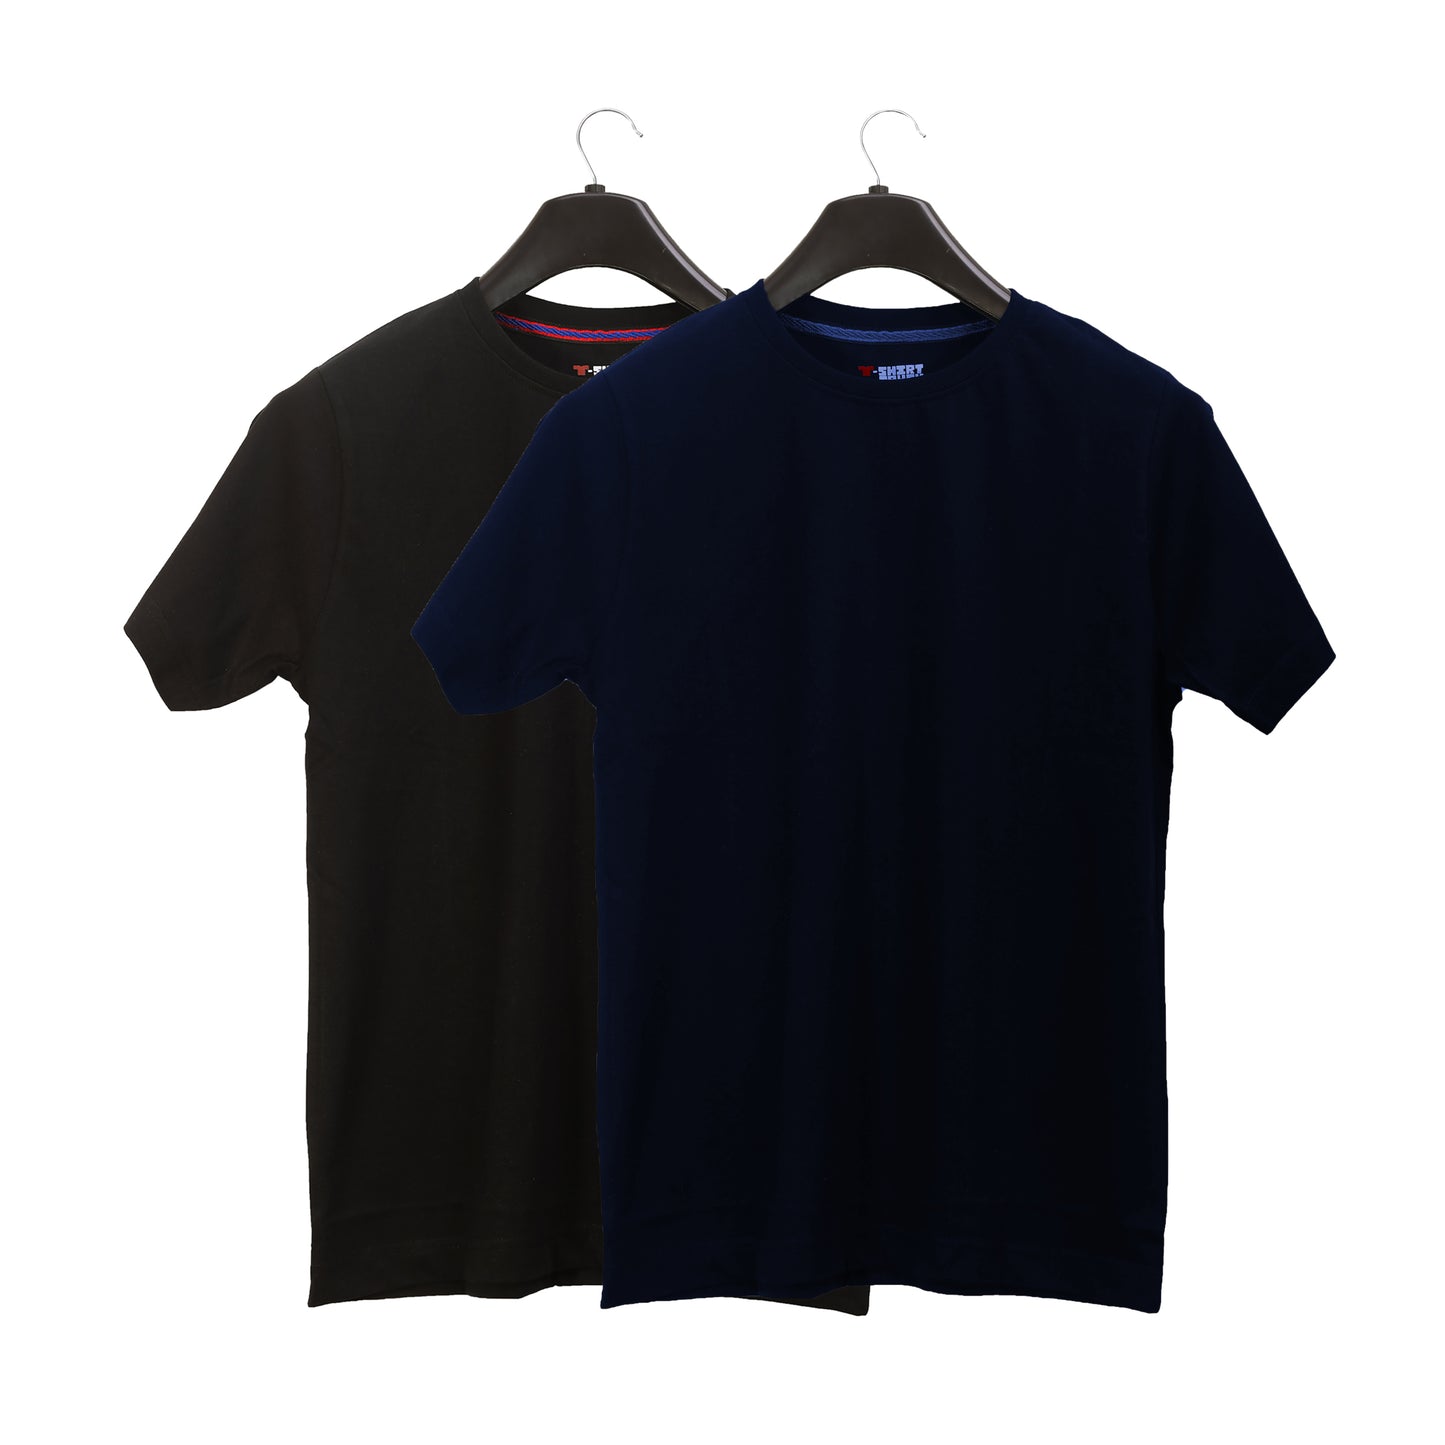 Unisex Round Neck Plain Solid Combo Pack of 2 T-shirts Black & Blue